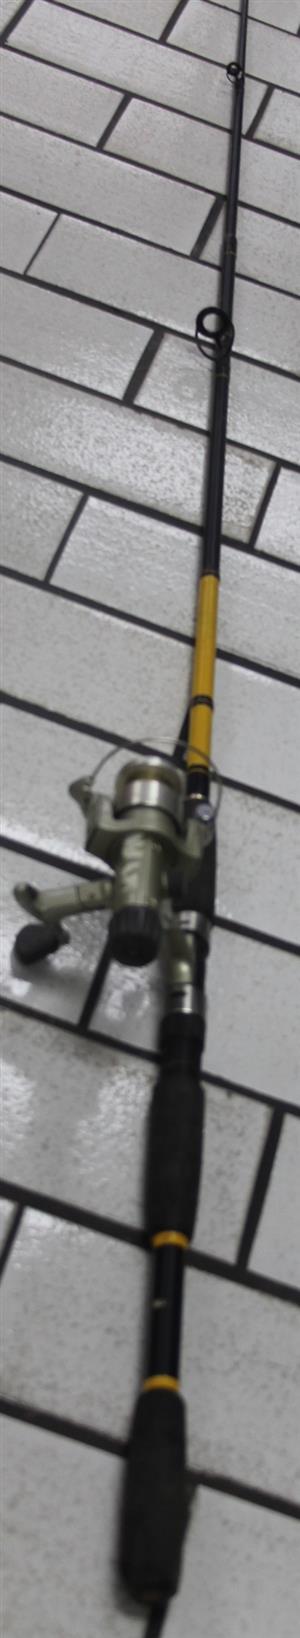 S034303C Fishing rod with reel #Rosettenvillepawnshop